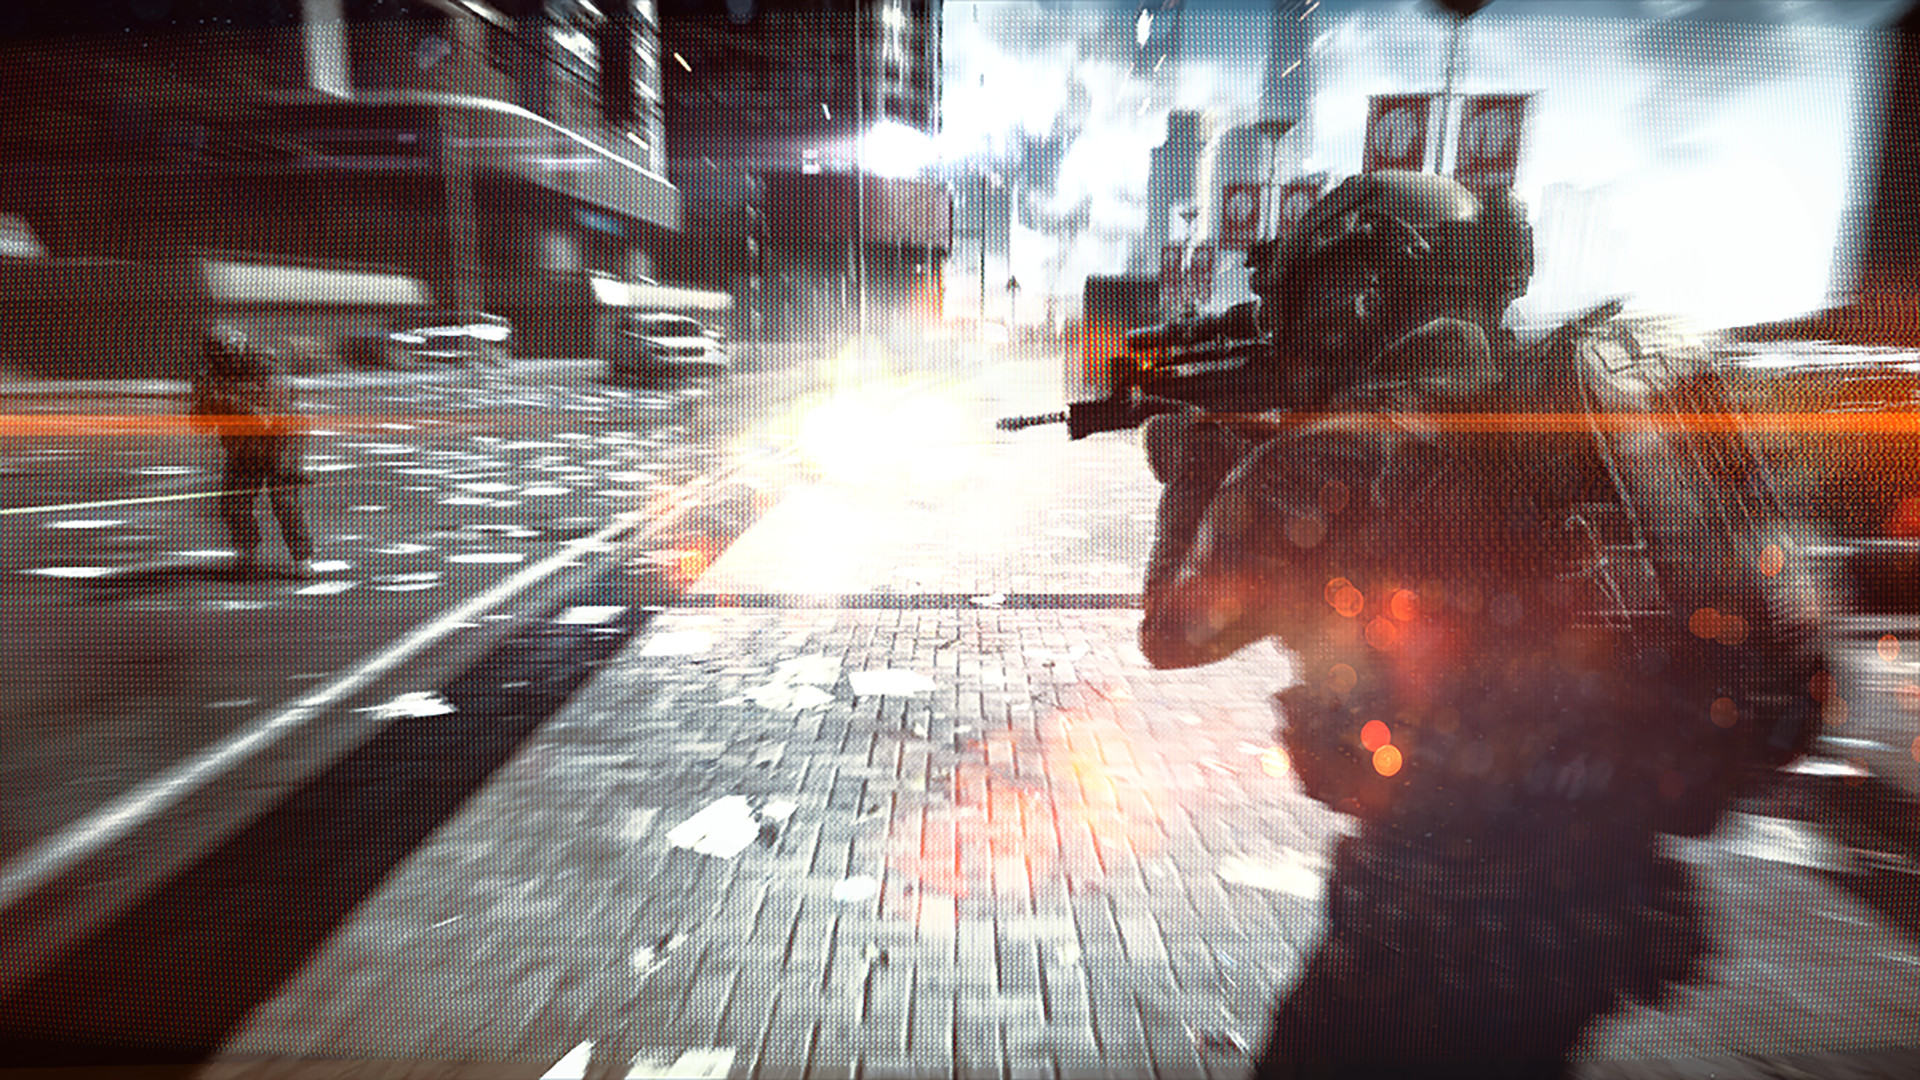 Battlefield 4™ Community Operations on Steam